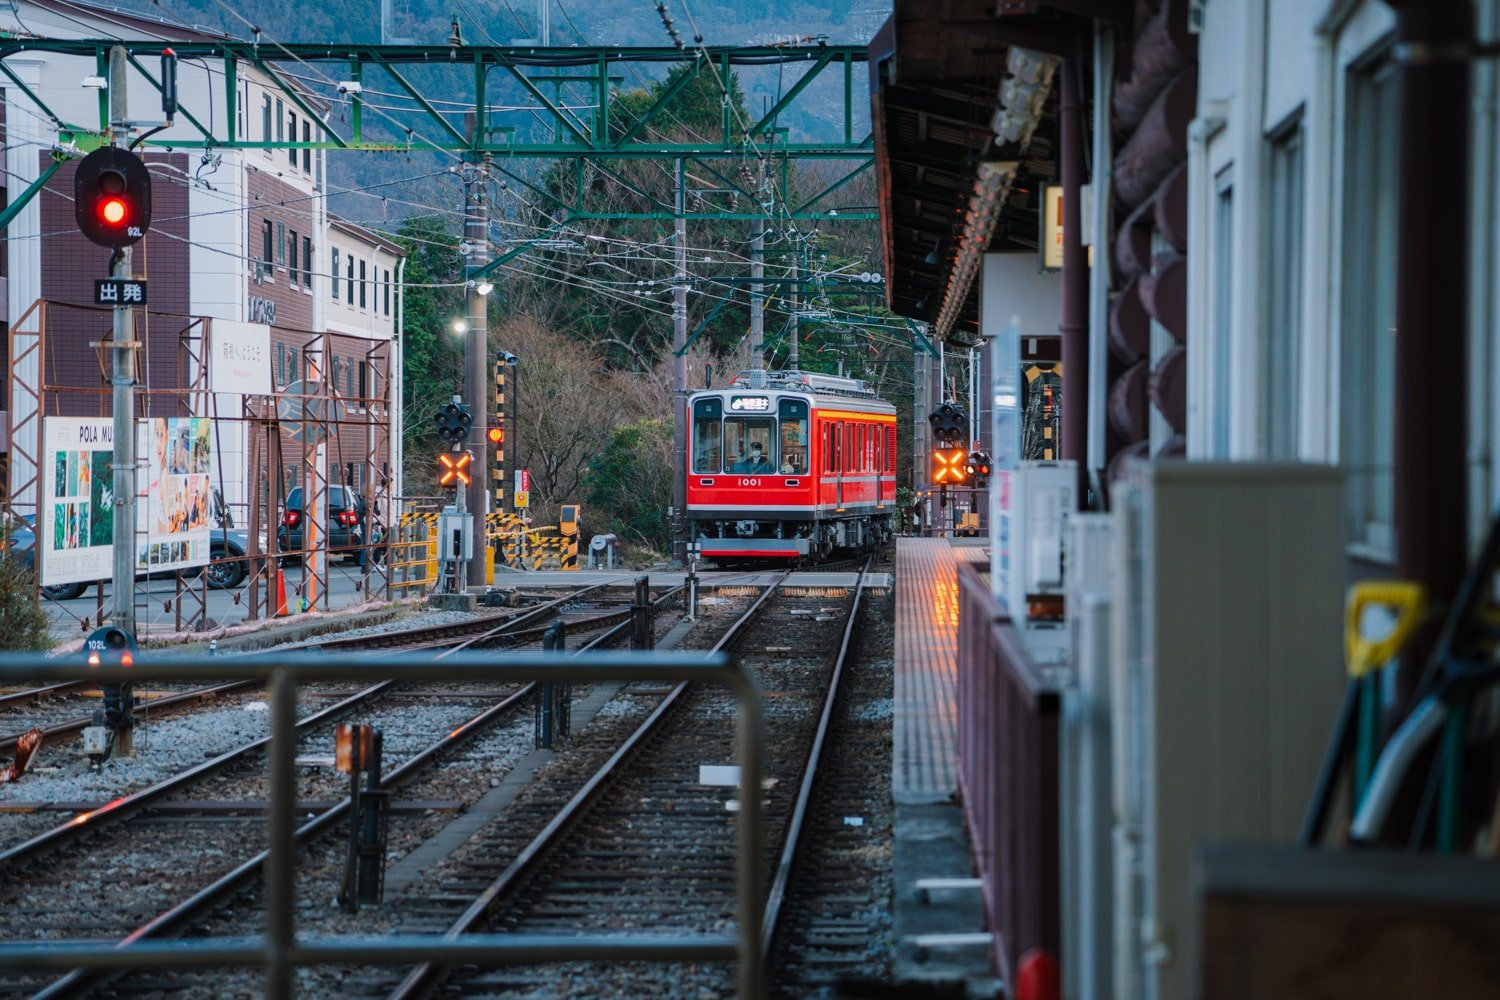 A red passenger train (Hakone Tozan line) on railway tracks arriving at the Gora station in Hakone, Japan.